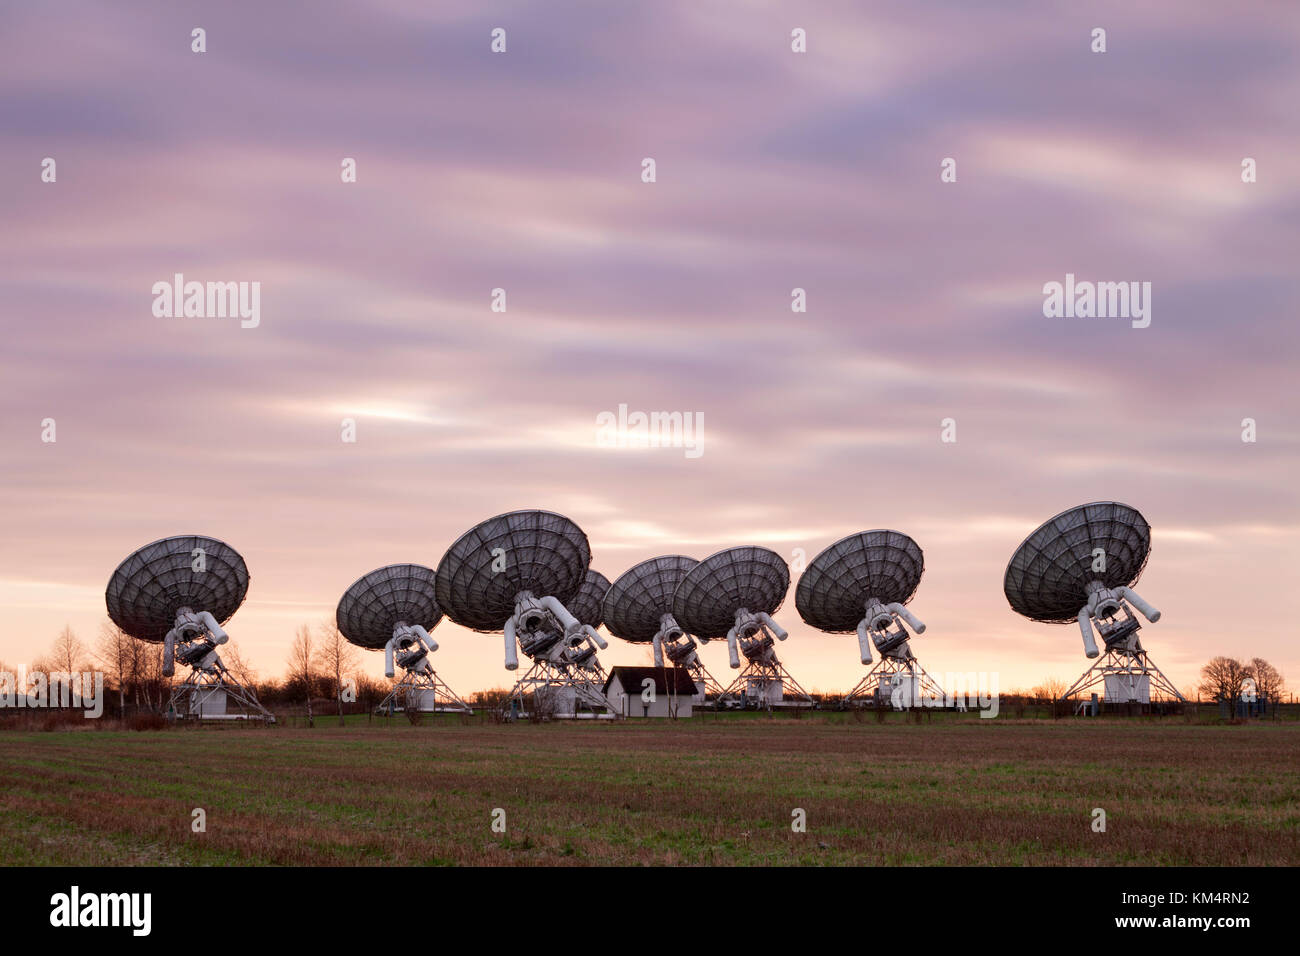 Observatoire de Radioastronomie Mullard, Barton, Cambridge, Royaume-Uni Banque D'Images